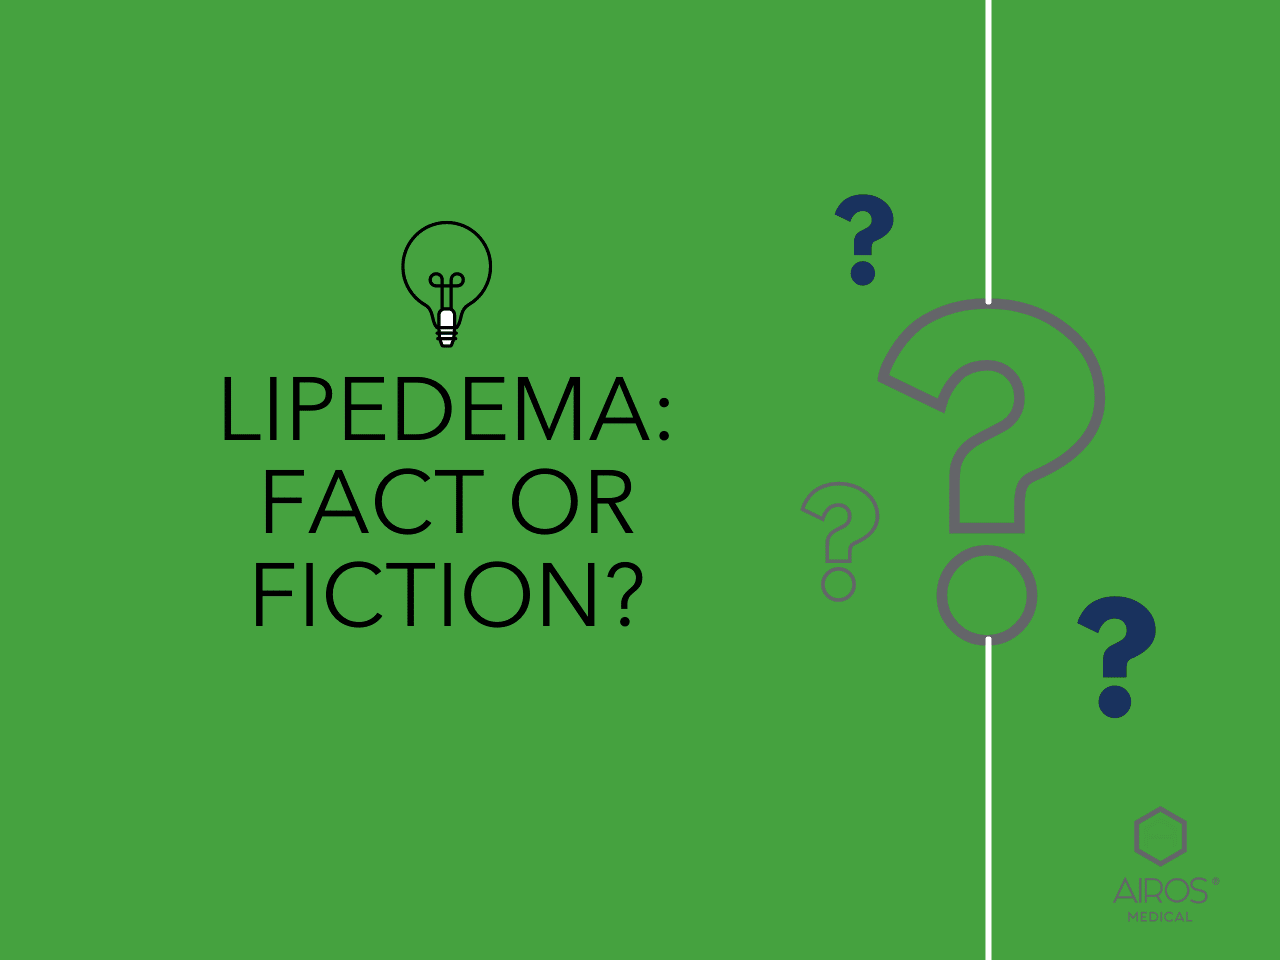 Lipedema: Myth or Fact